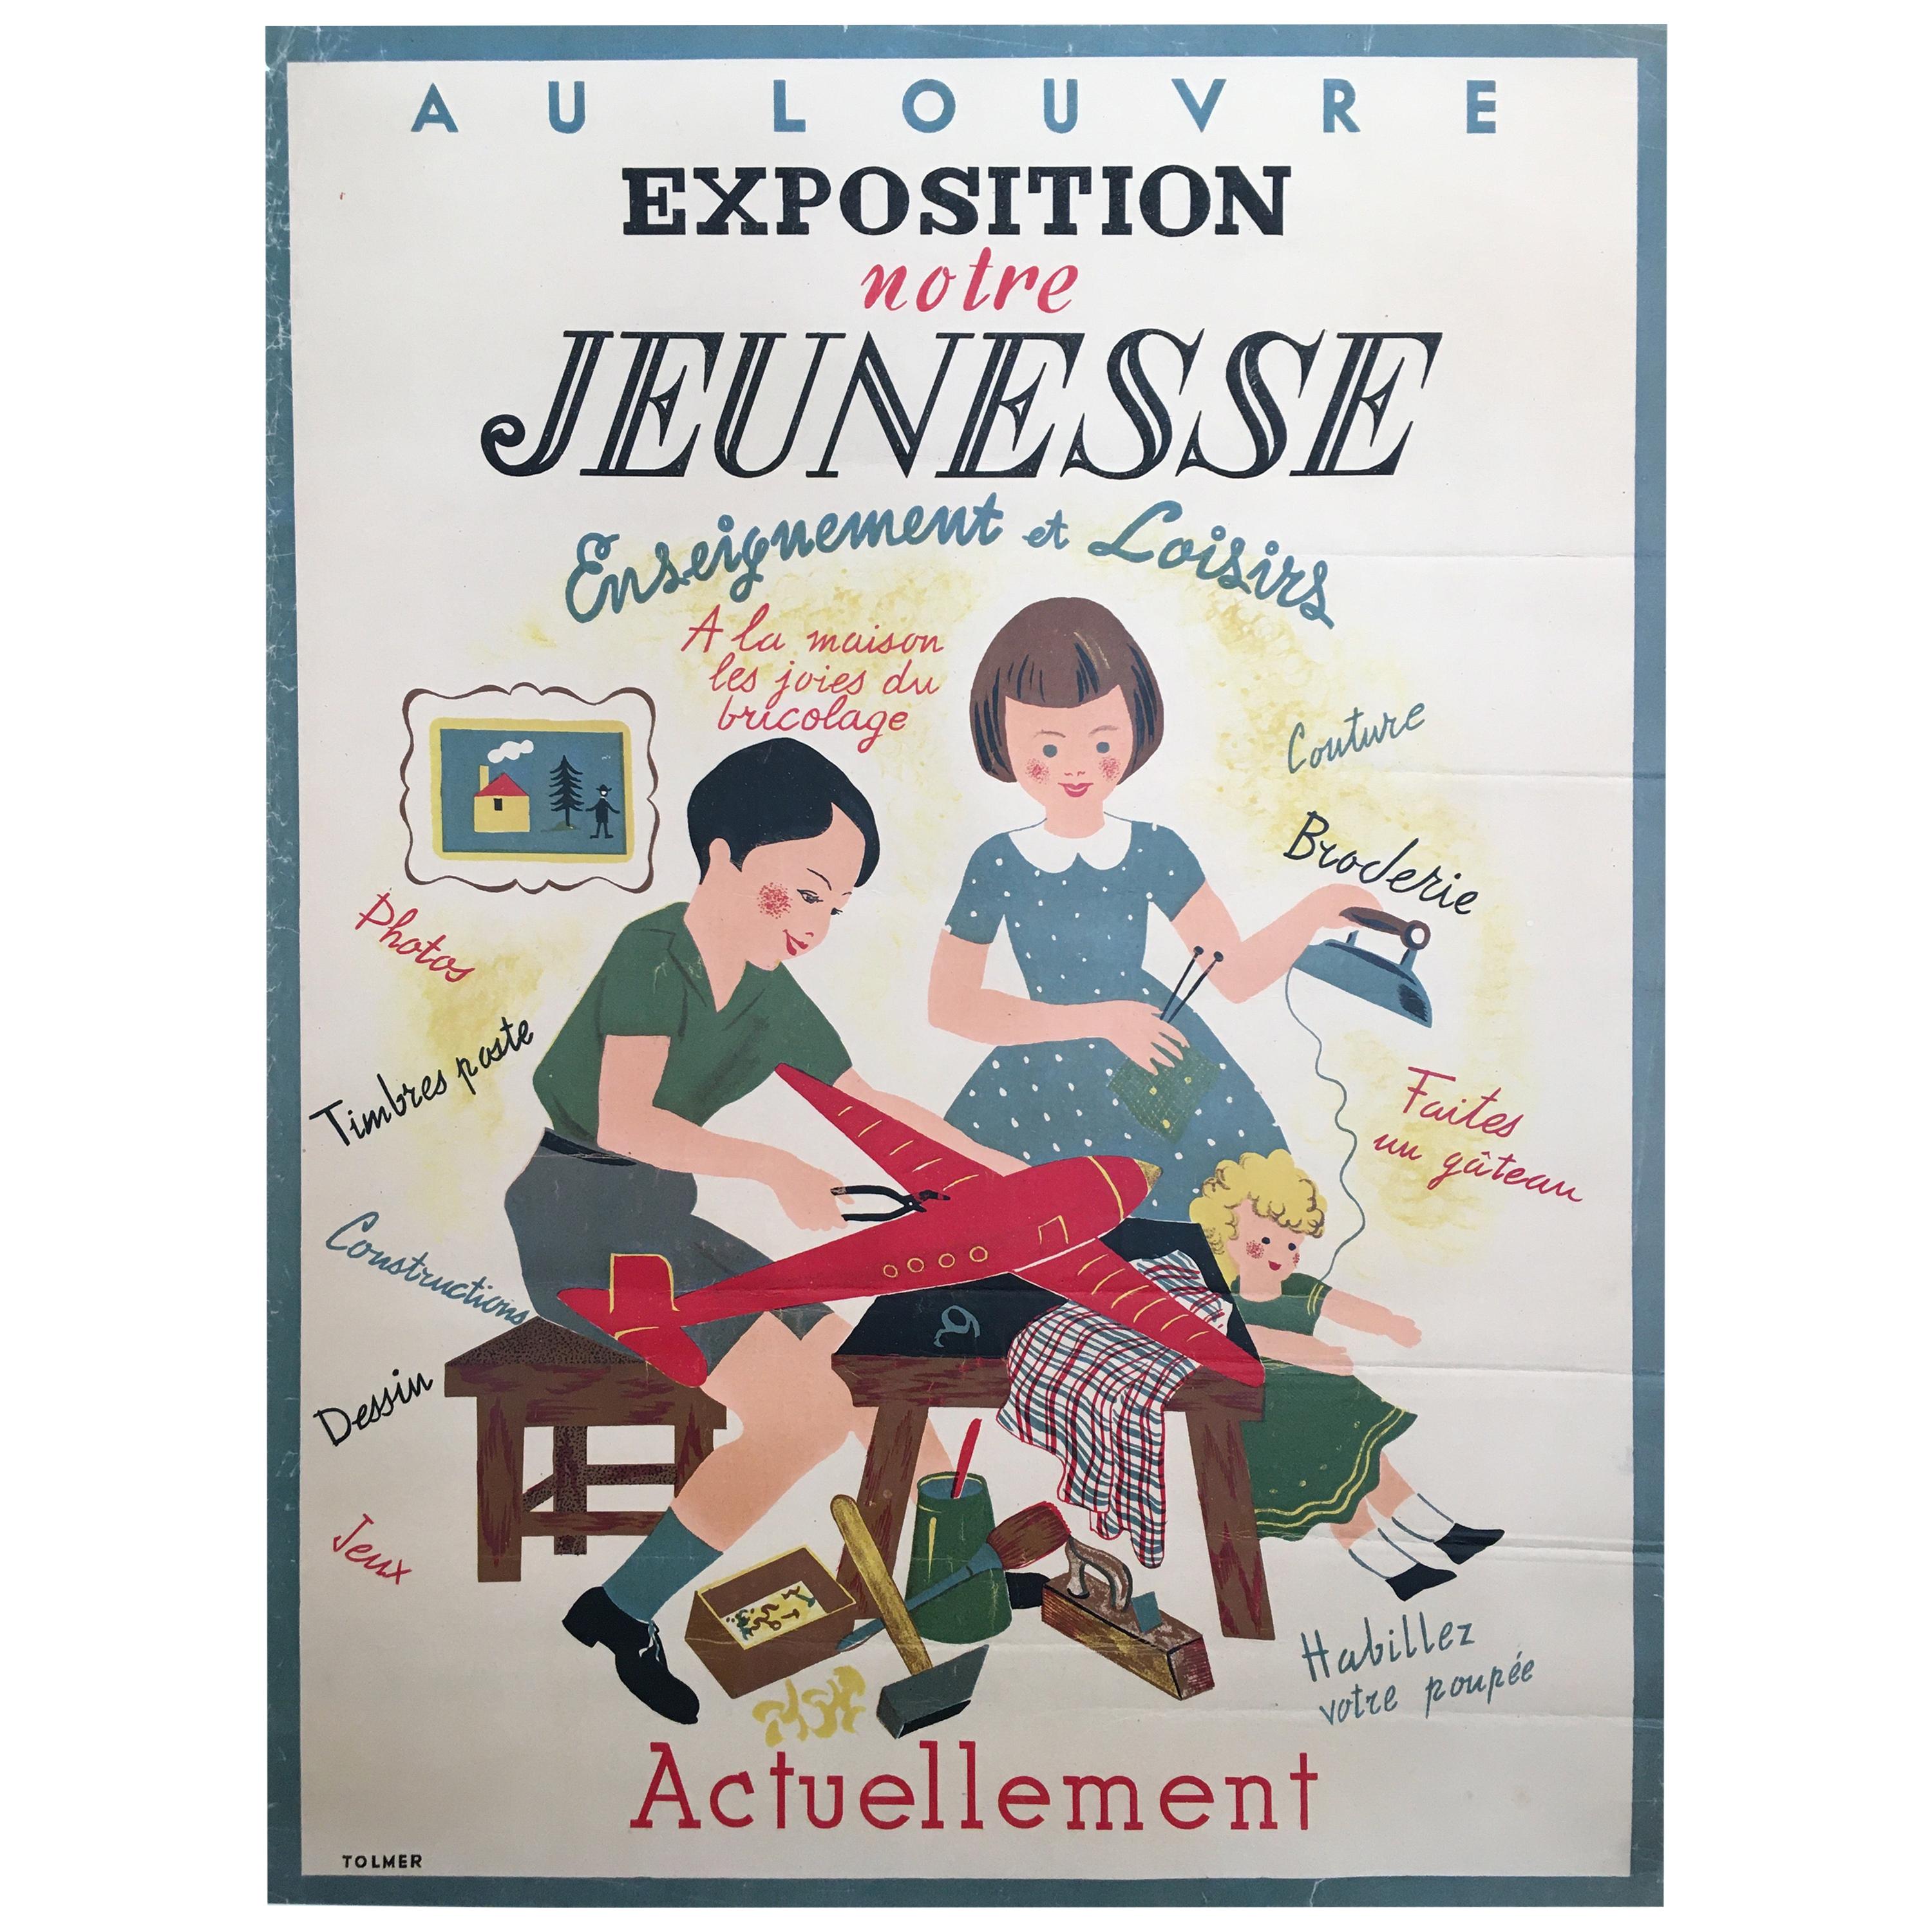 Original Vintage French Children's Art Deco Poster, 'Exposition Notre', 1935